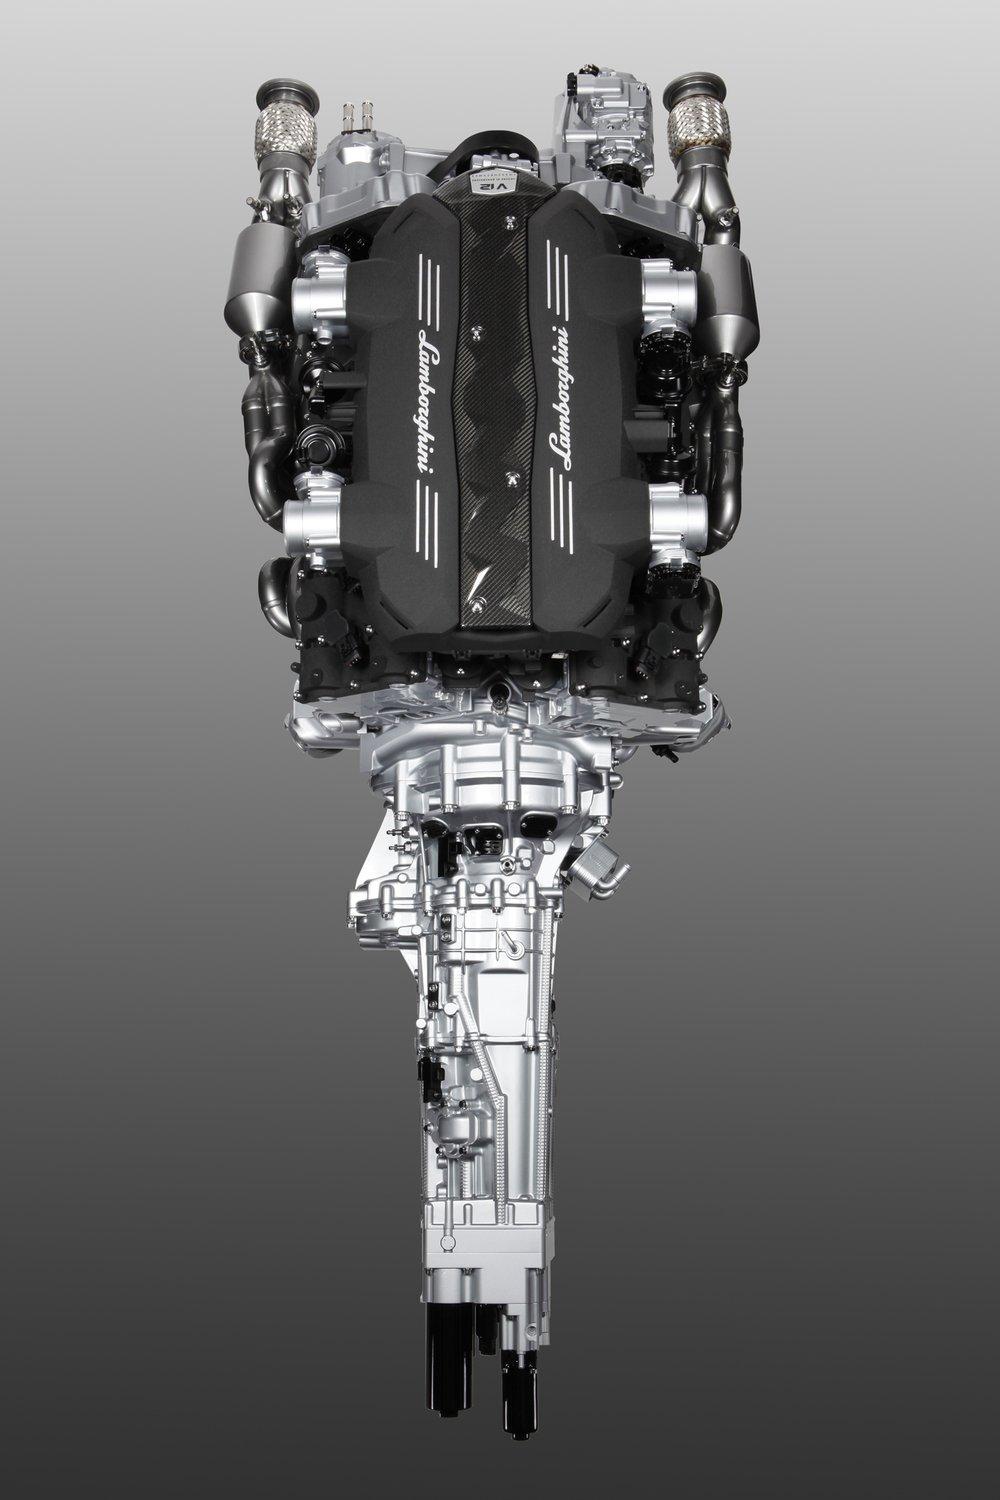 Lamborghini L539 Engine